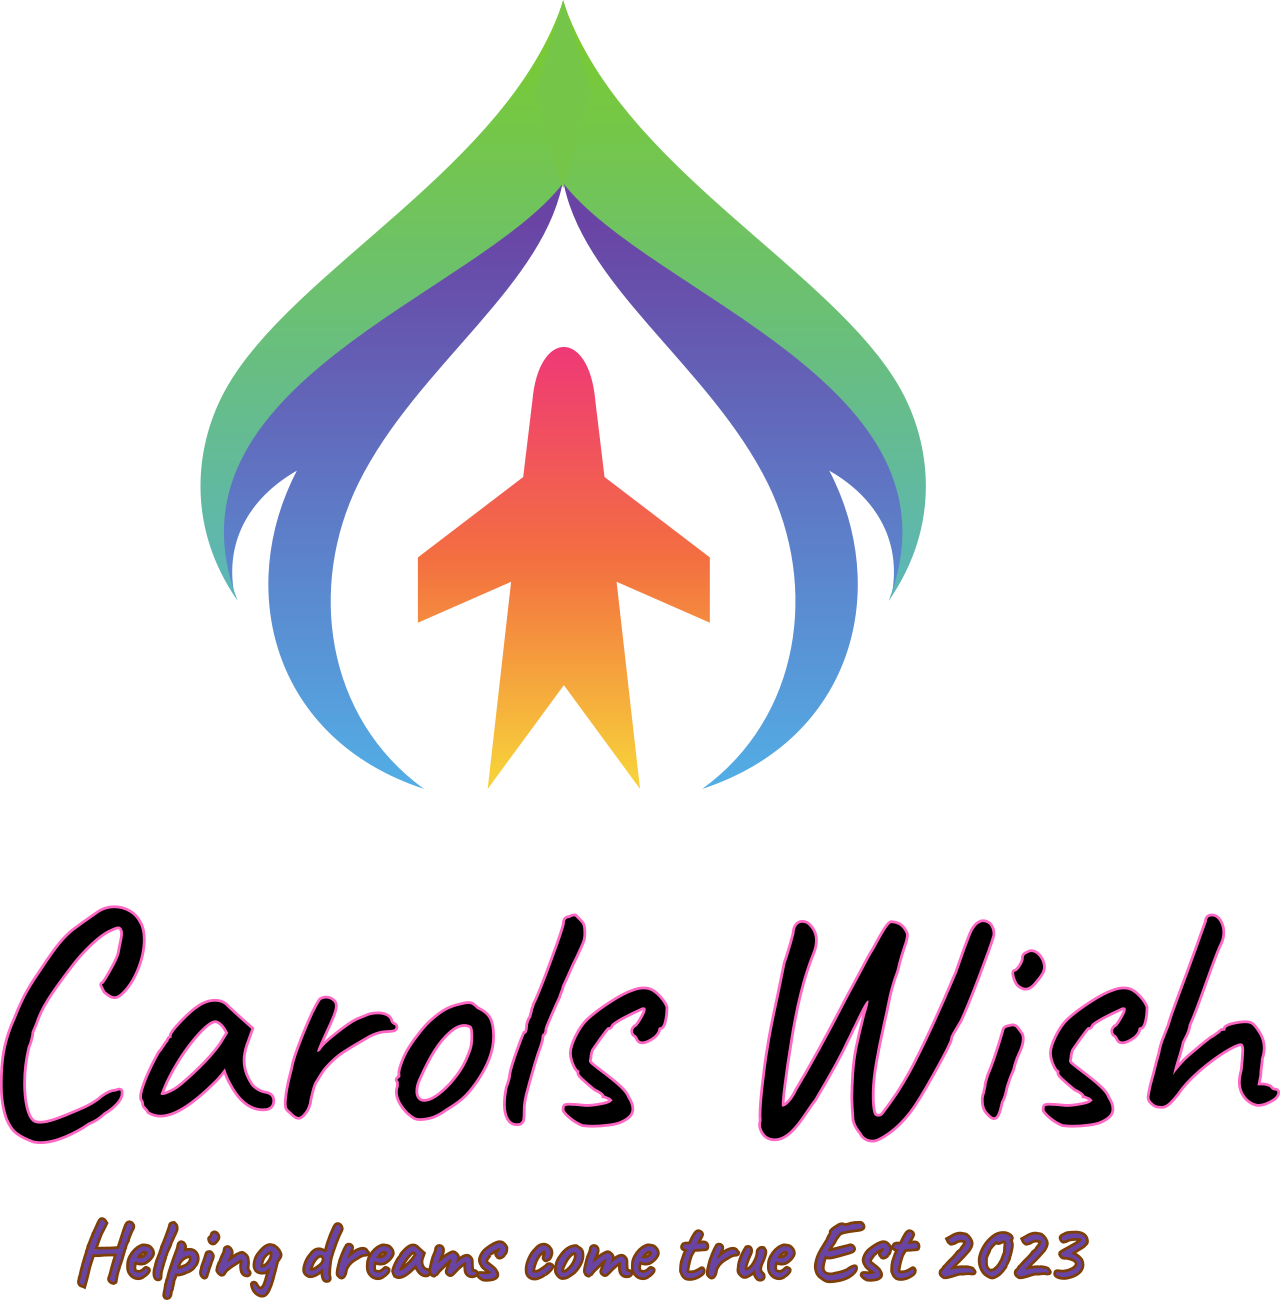  Carols Wish's web page